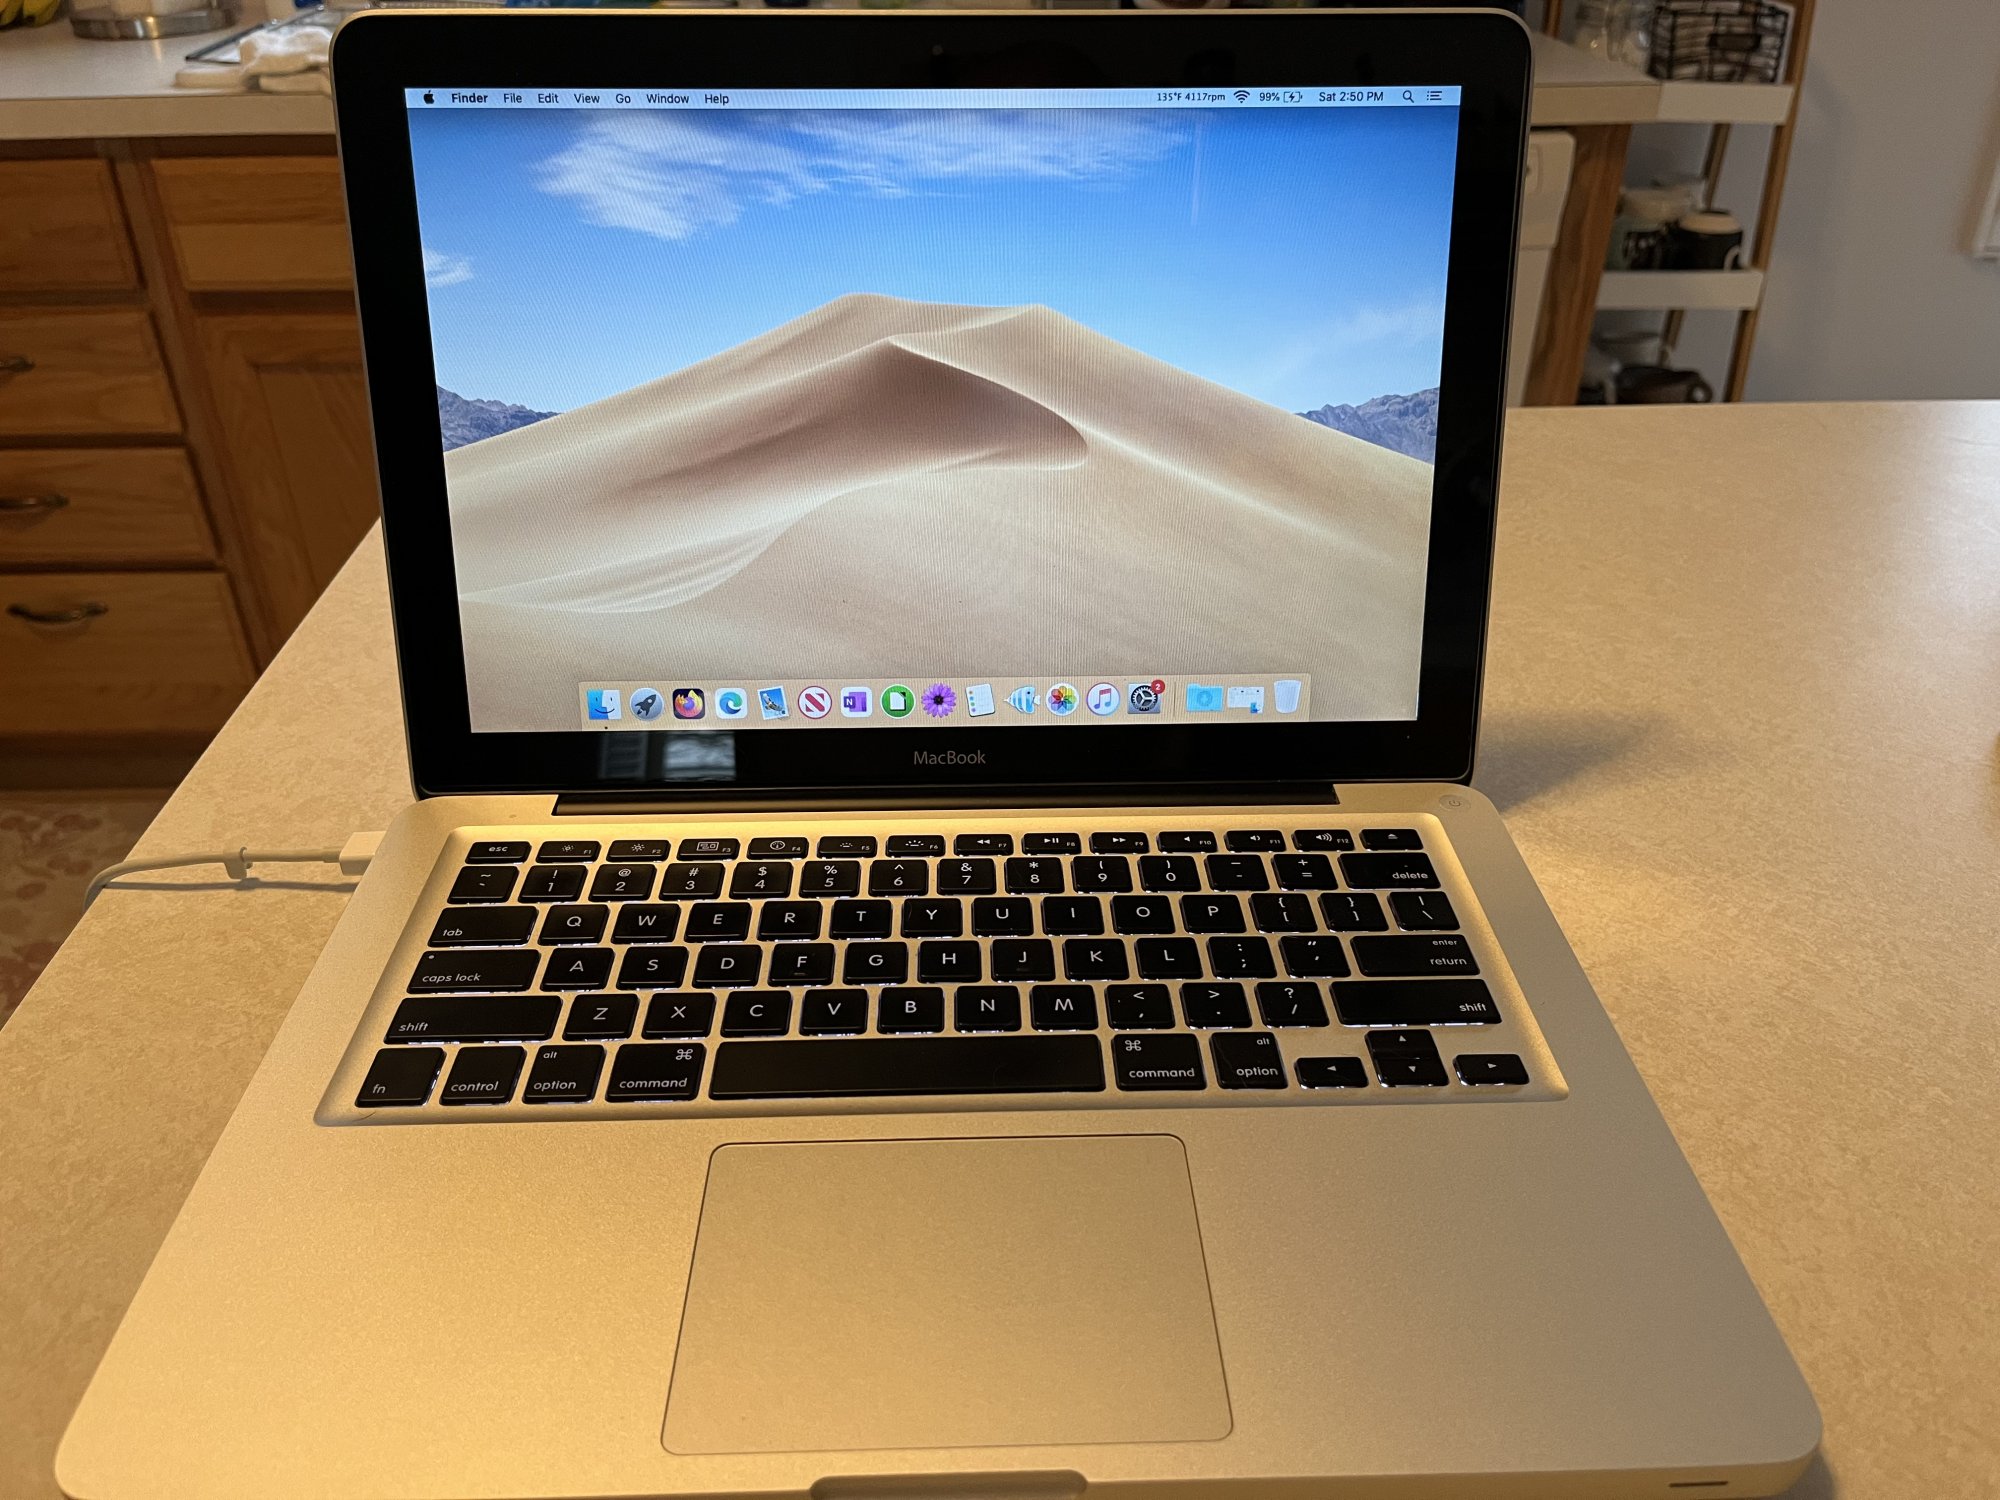 MacBook 2008 Aluminum photo.jpg